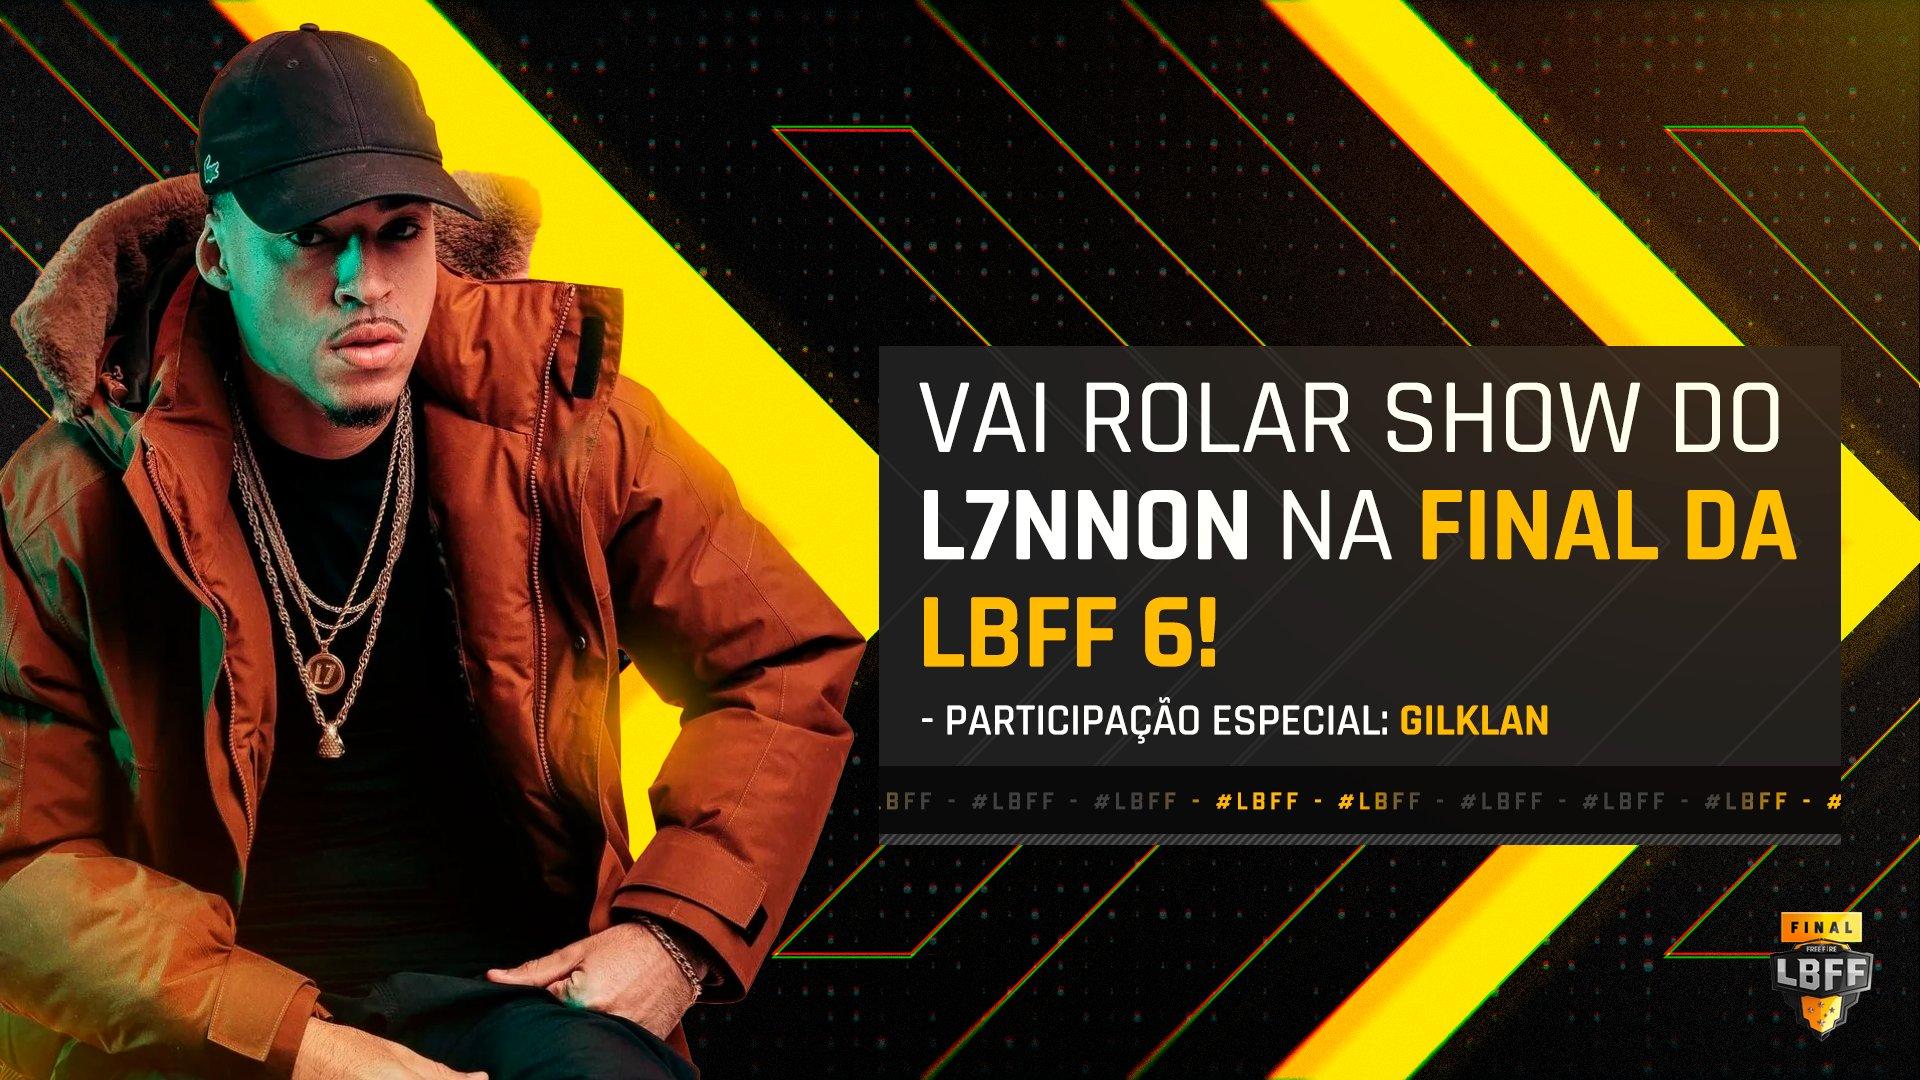 Rapper L7NNON fará show na grande final da LBFF 6 2021